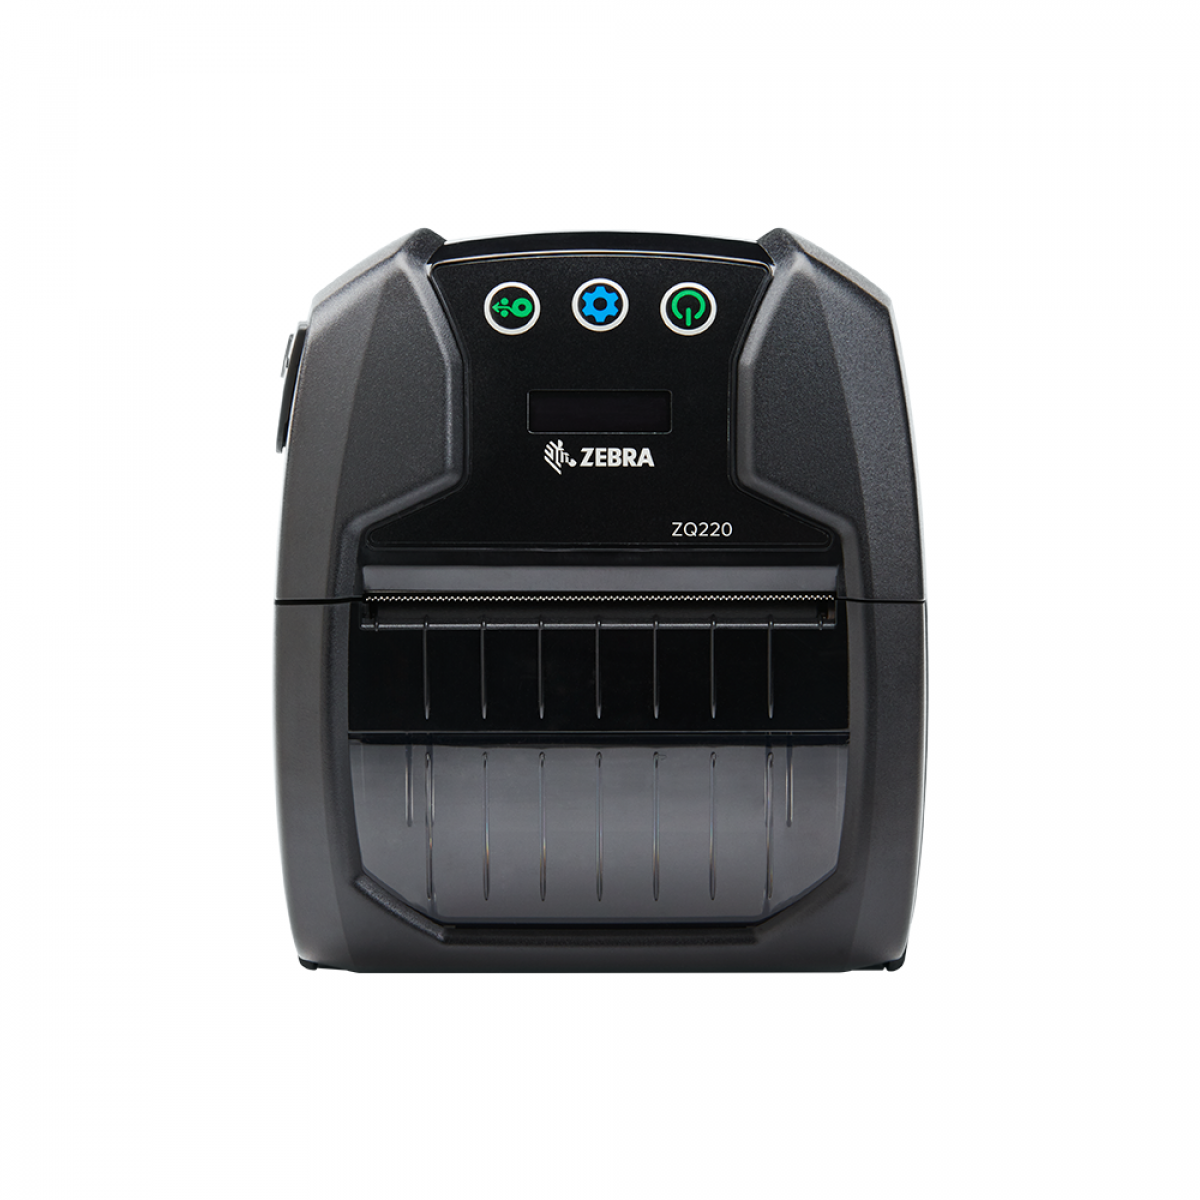 Zebra ZQ220 portable direct thermal printer